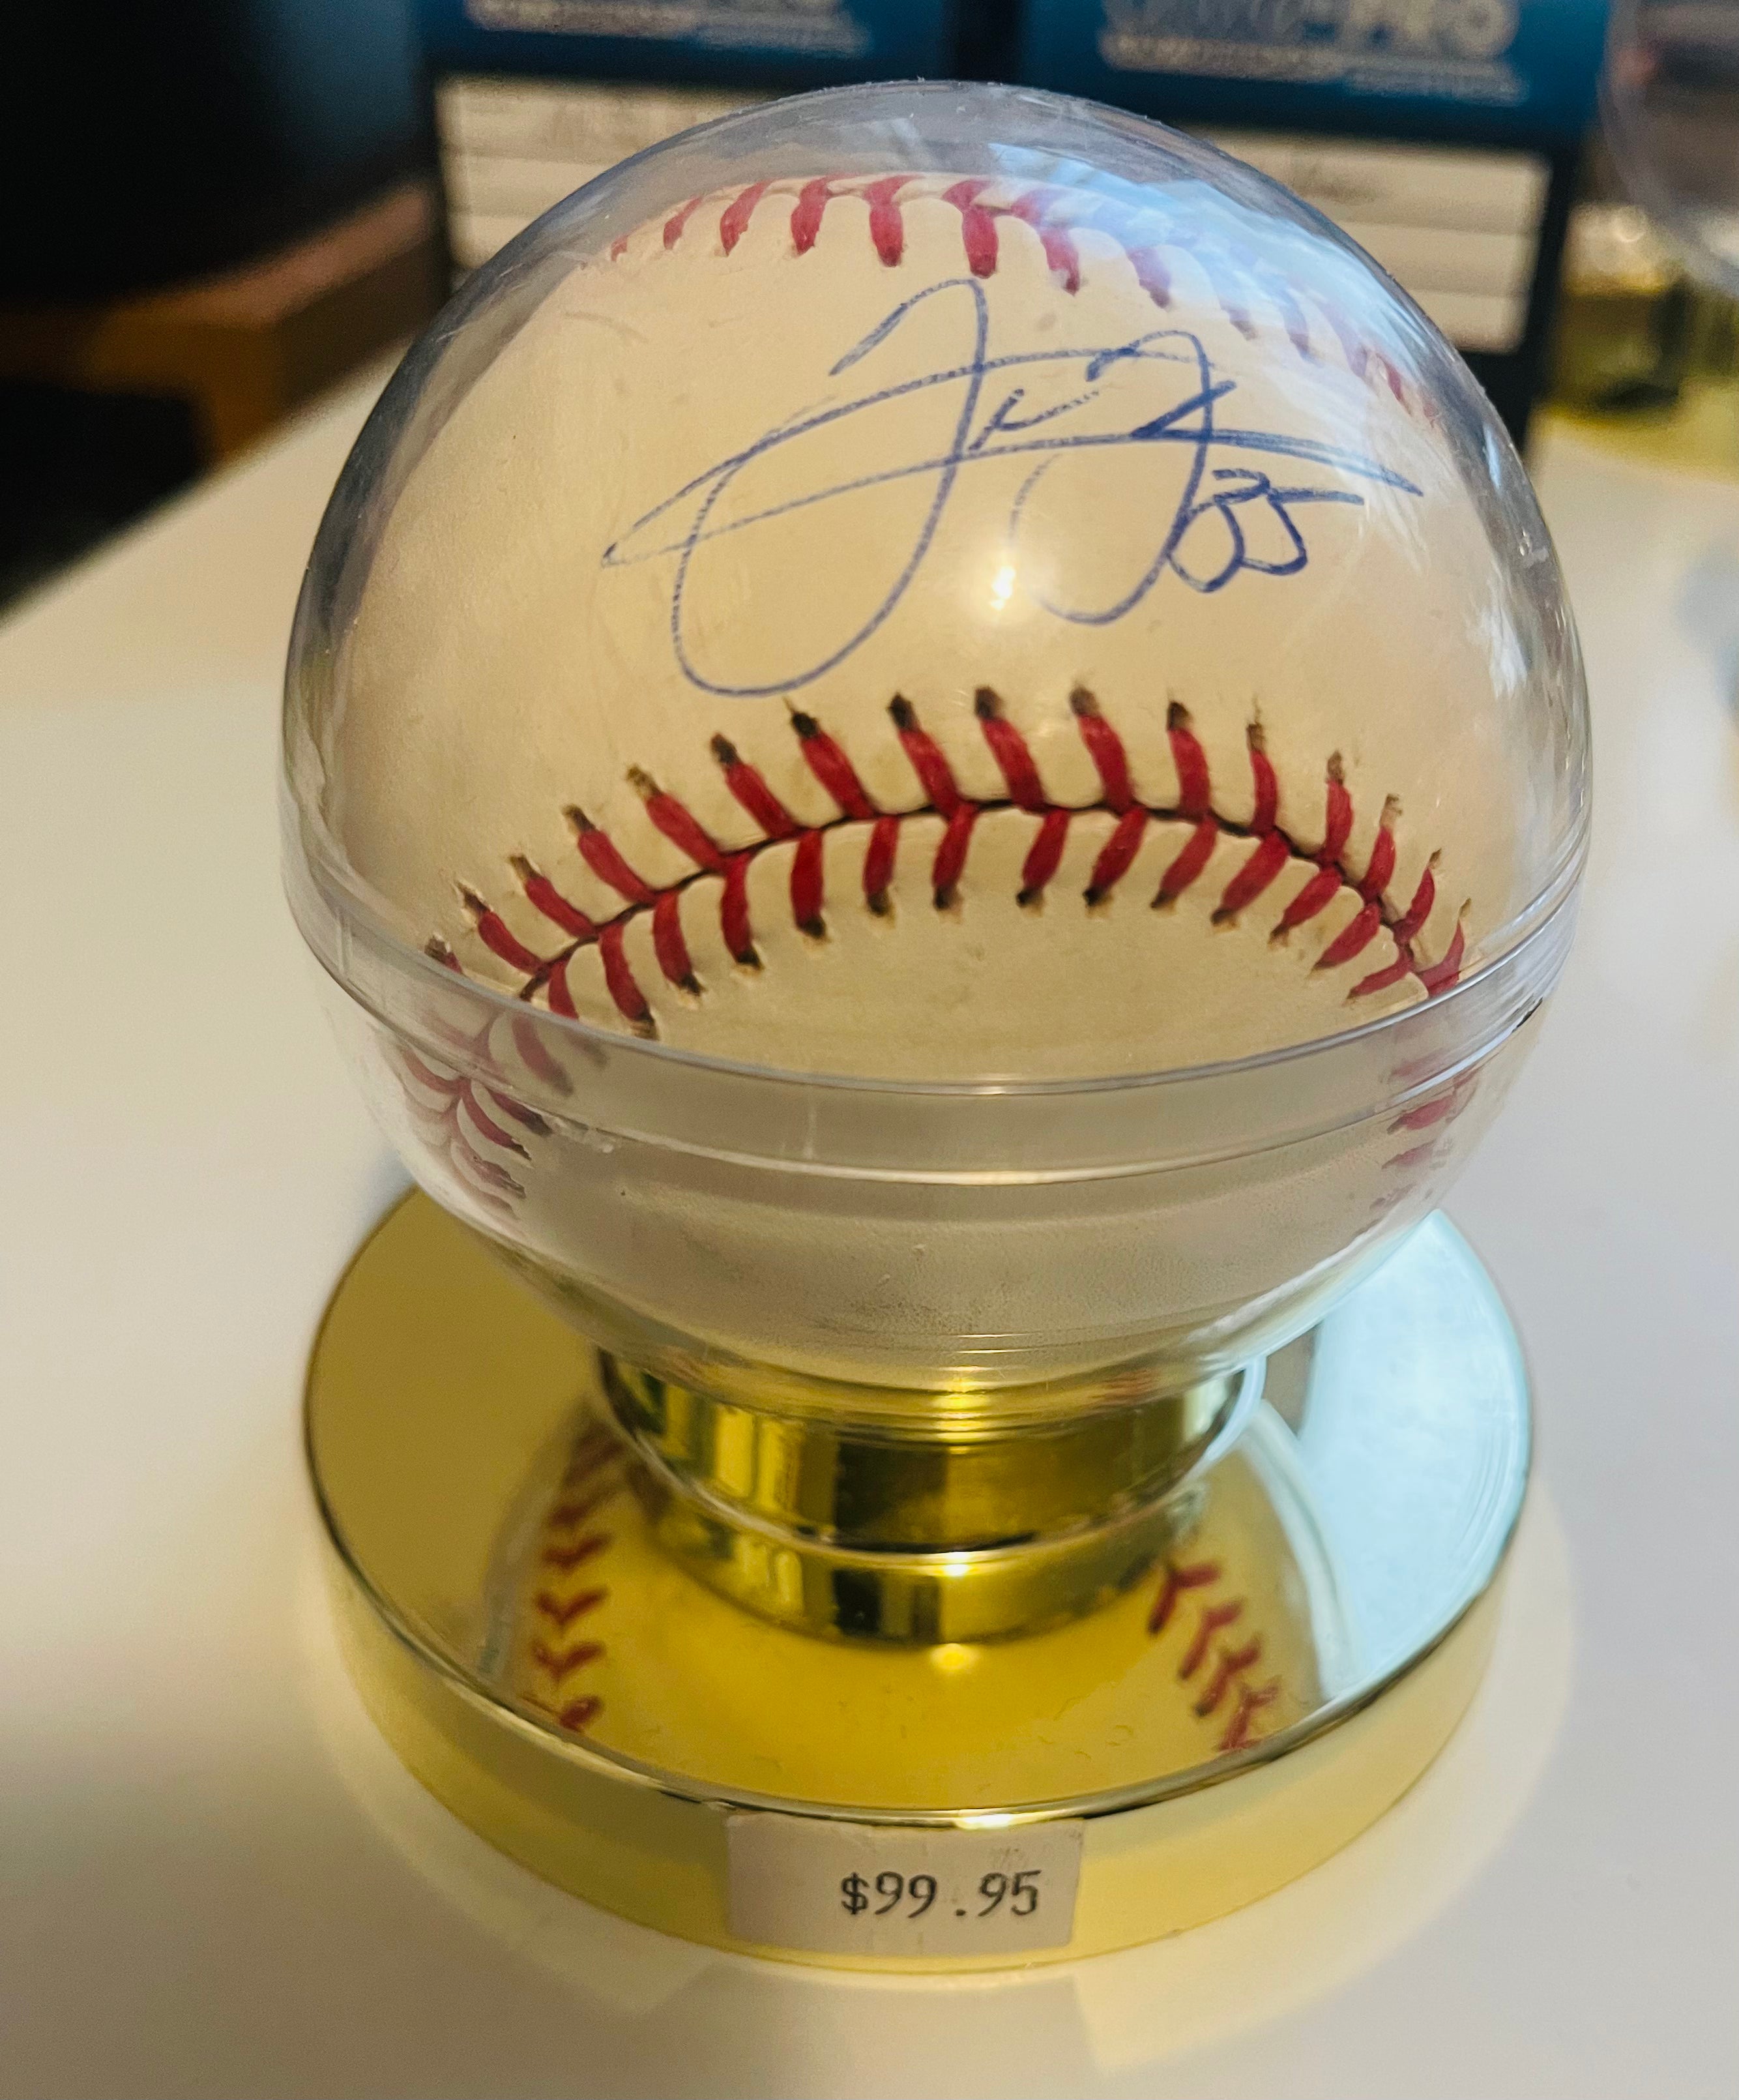 Frank Thomas autographed baseball with holder and COA